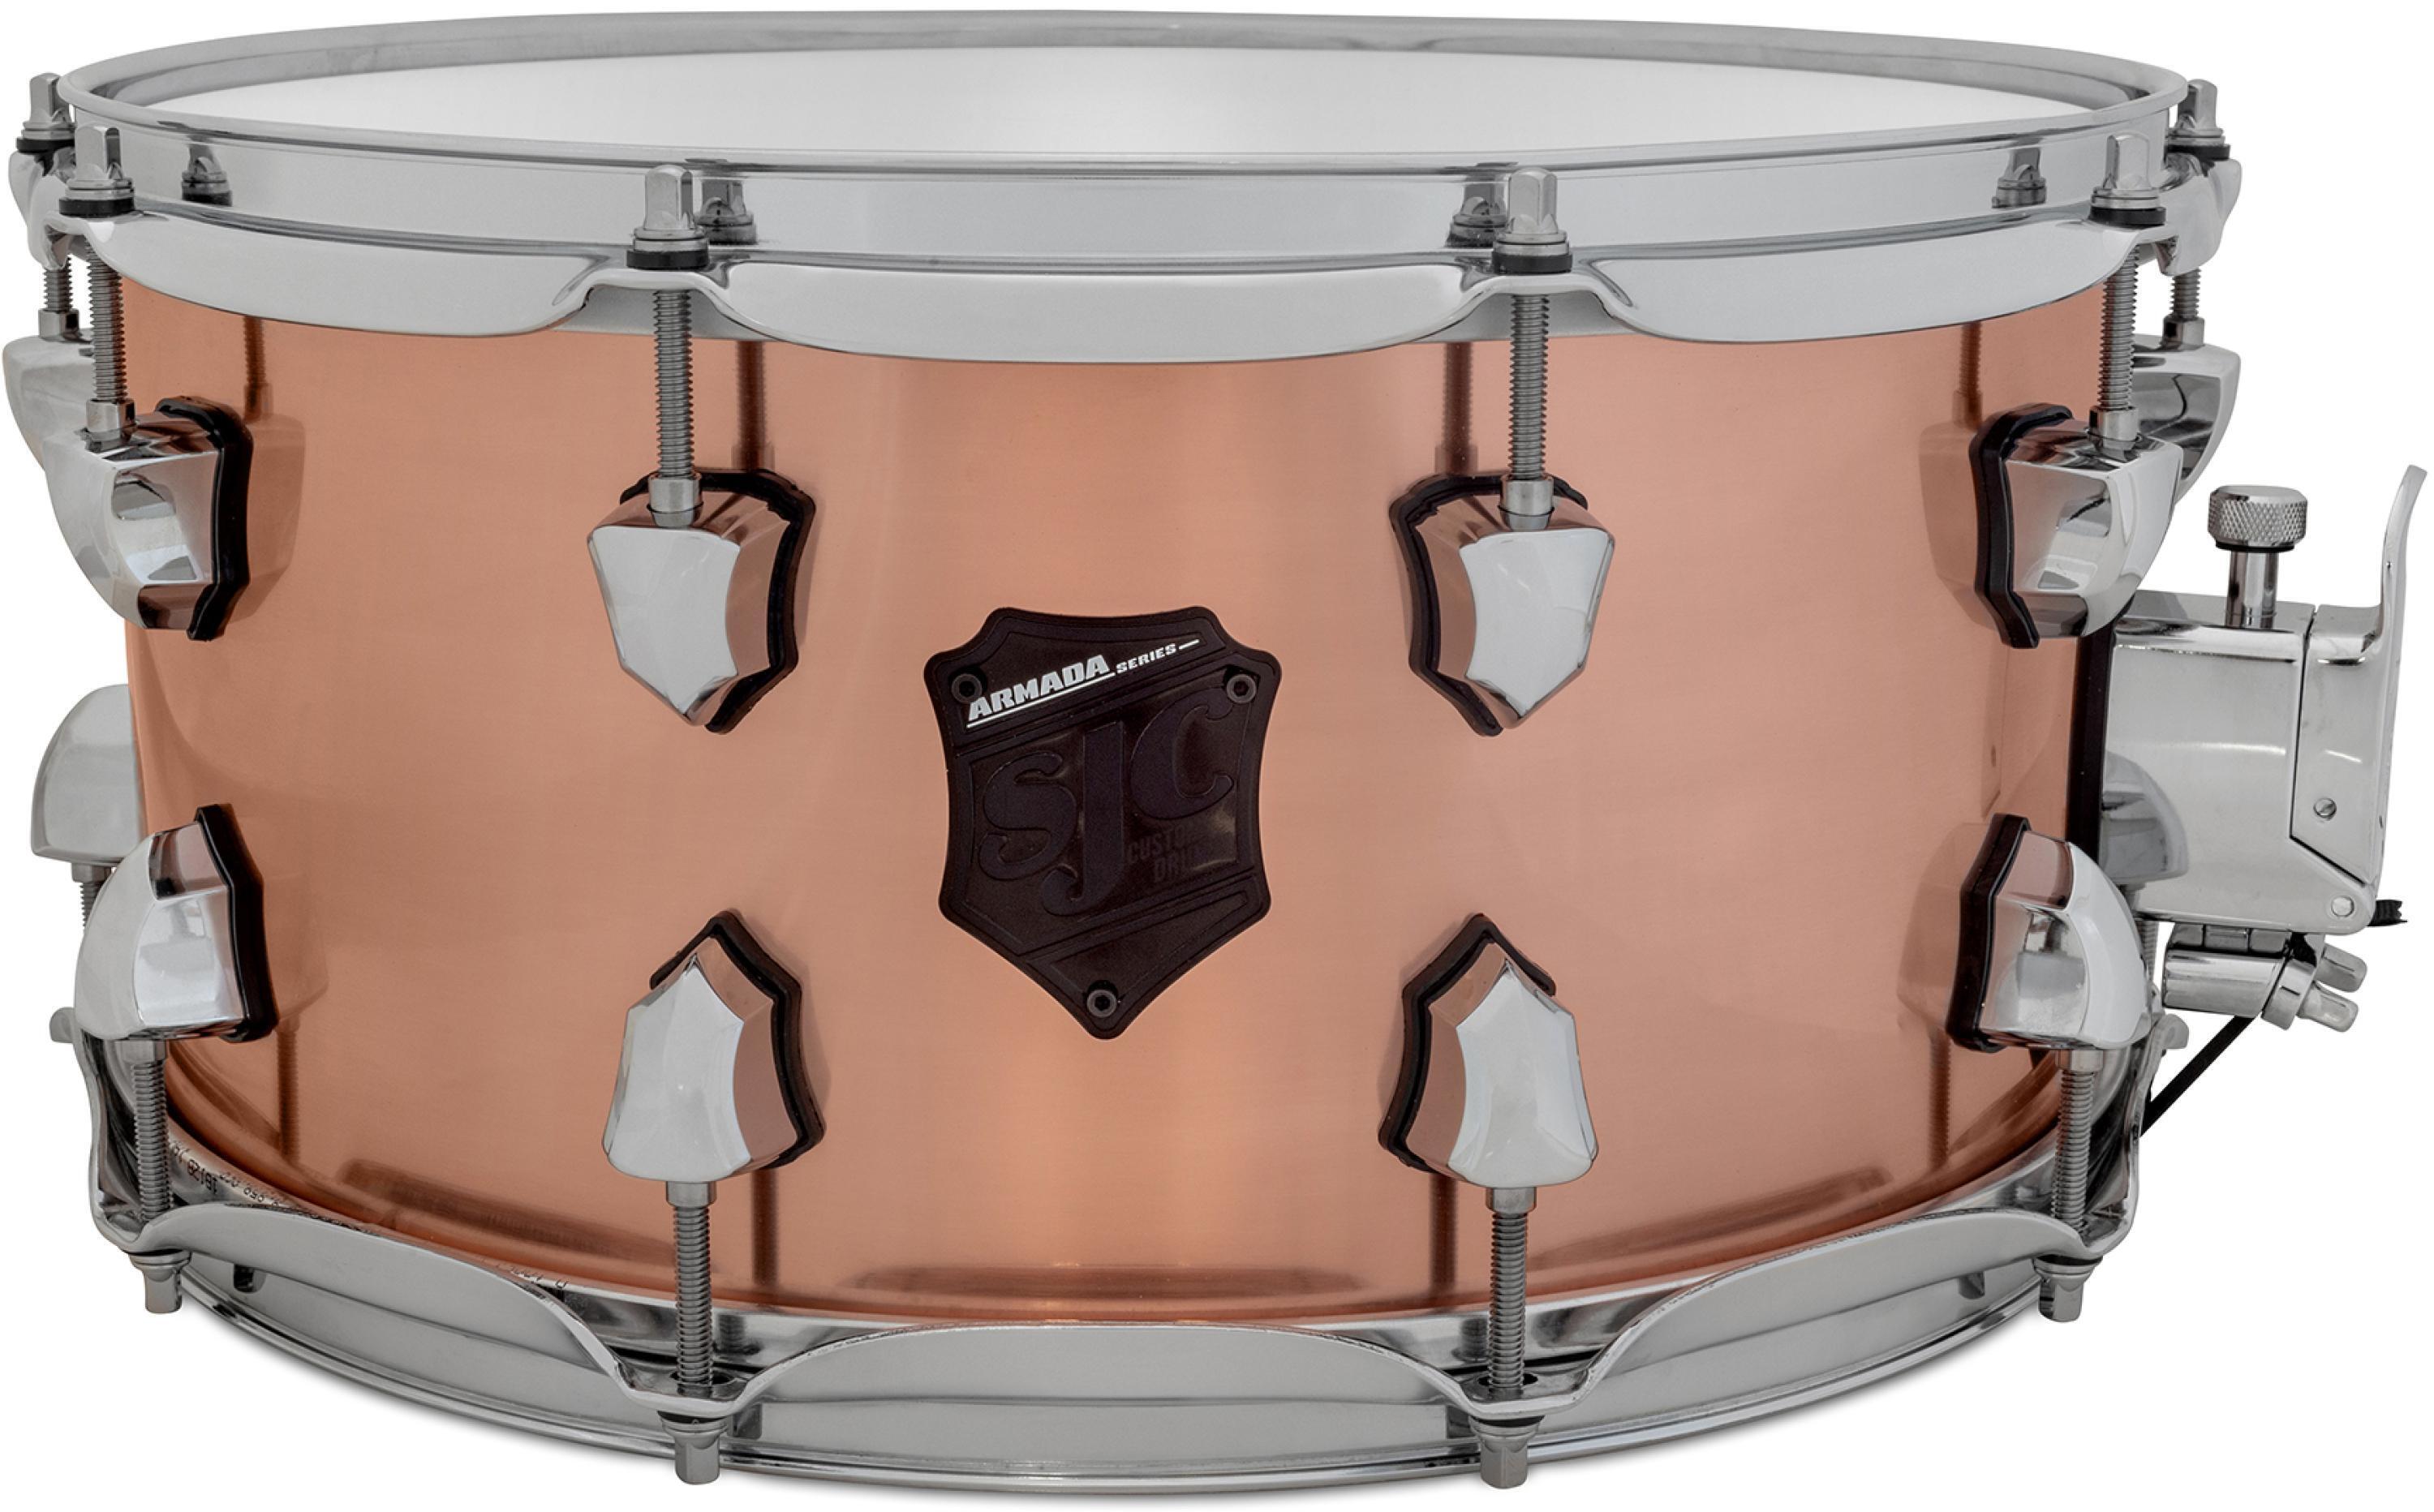 SJC Custom Drums Armada Series Copper Snare Drum - 7 x 14 inch - Chrome  Hardware